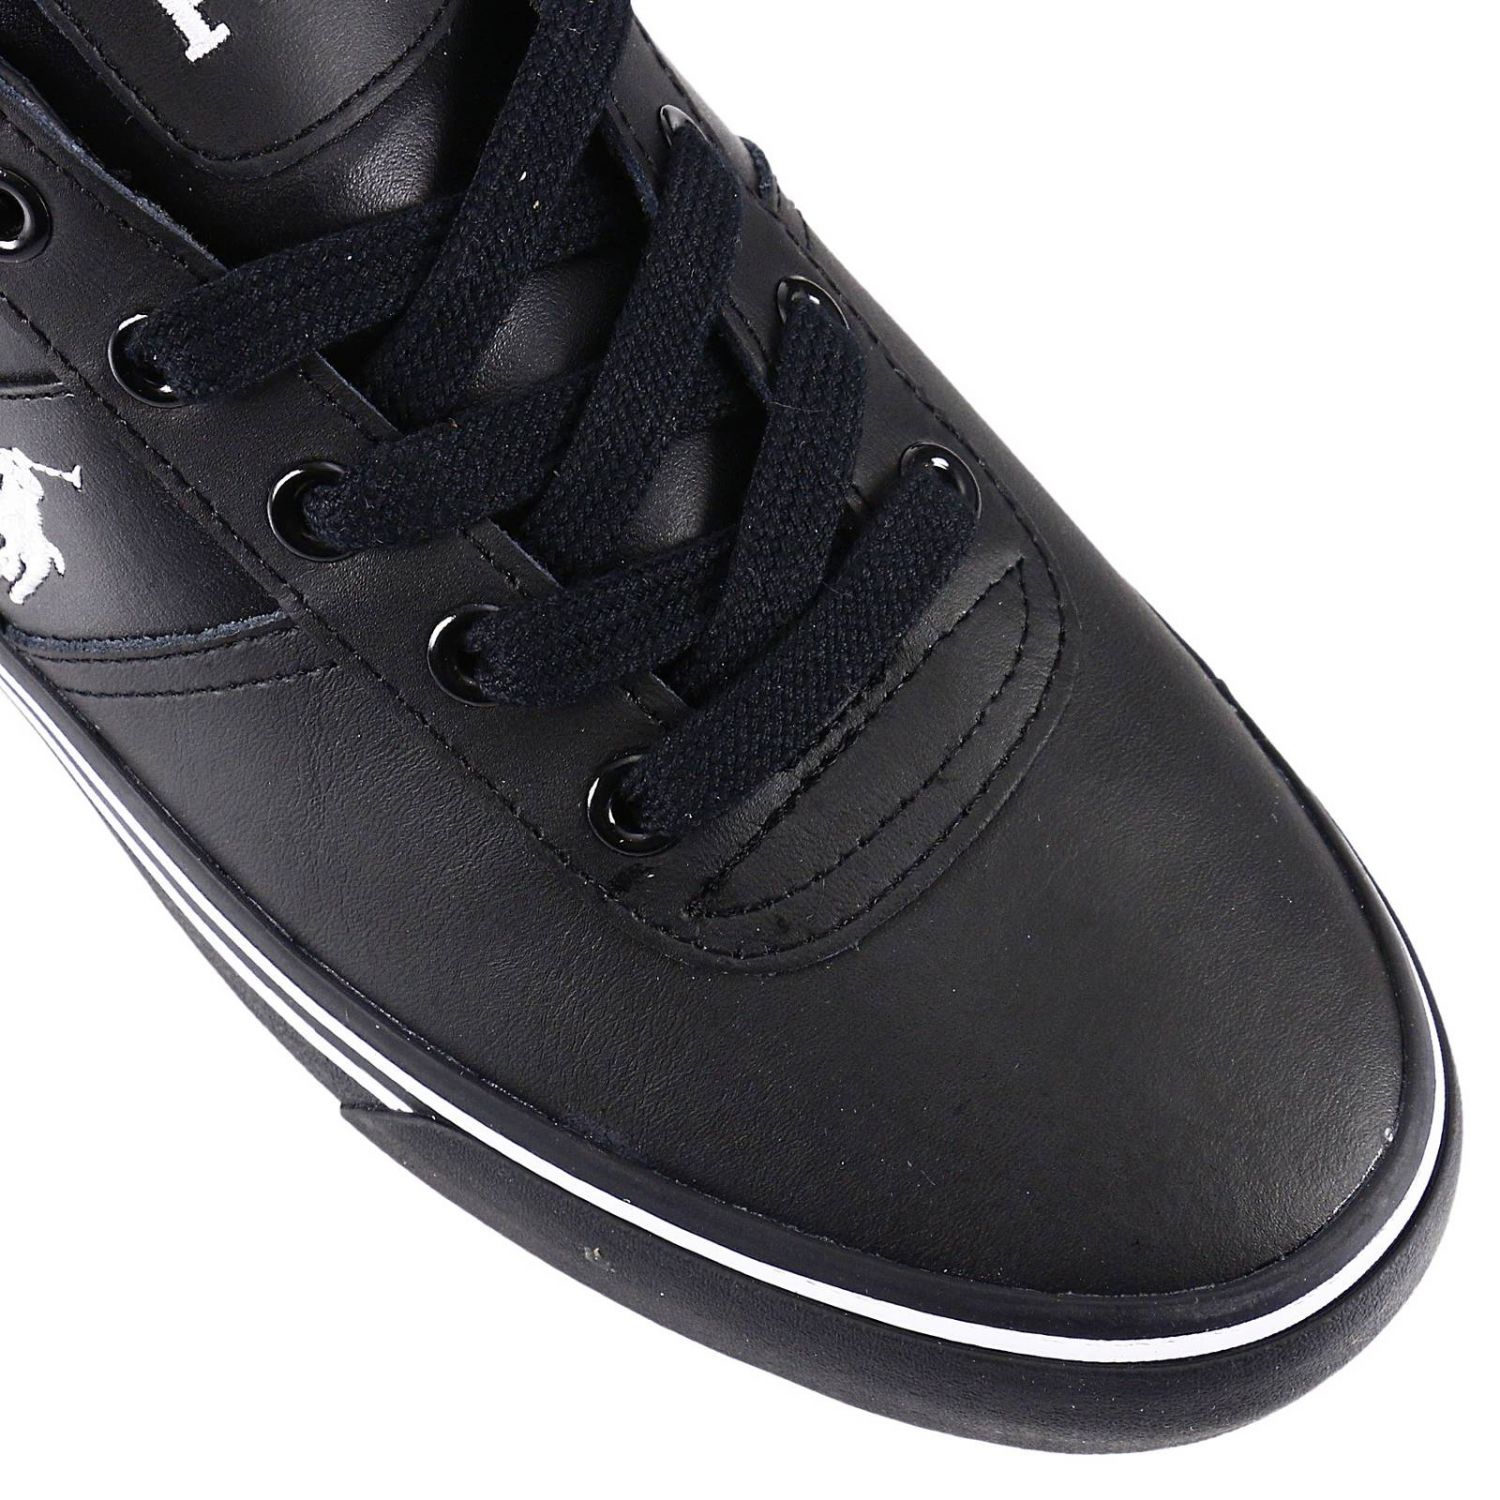 Polo Ralph Lauren Outlet: Shoes men | Sneakers Polo Ralph Lauren Men ...